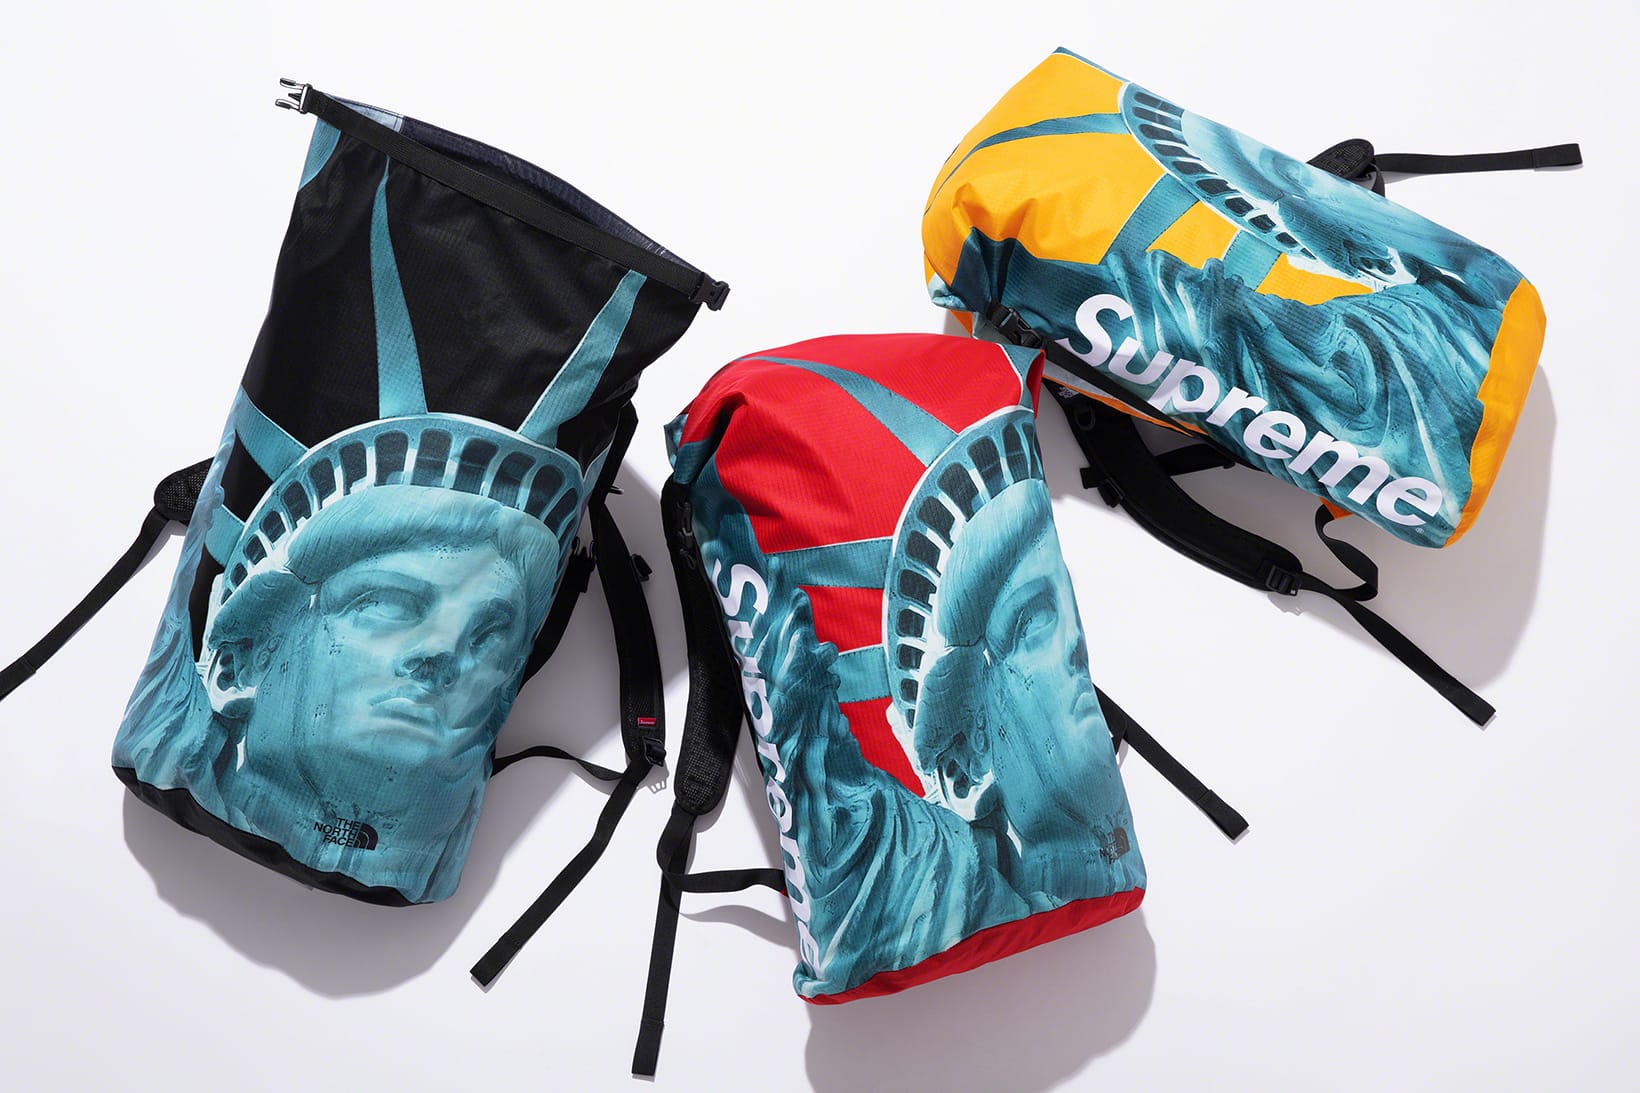 supreme north face backpack 2019